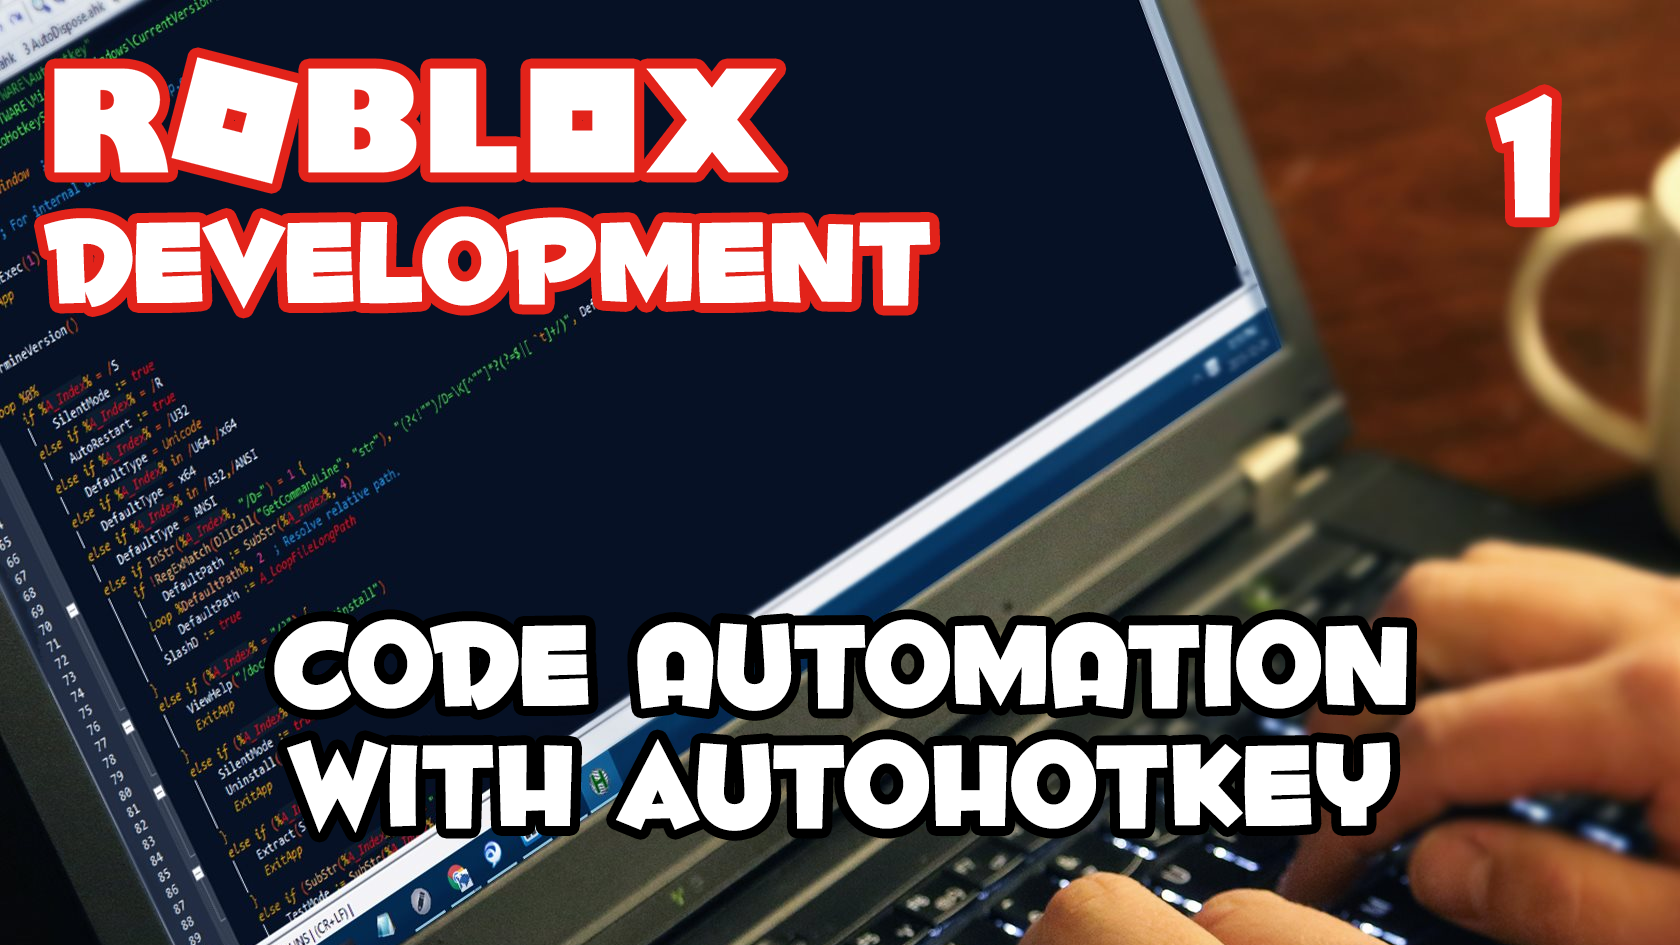 Roblox Code Automation With Lua Code Templates In Roblox Studio - roblox google classroom code